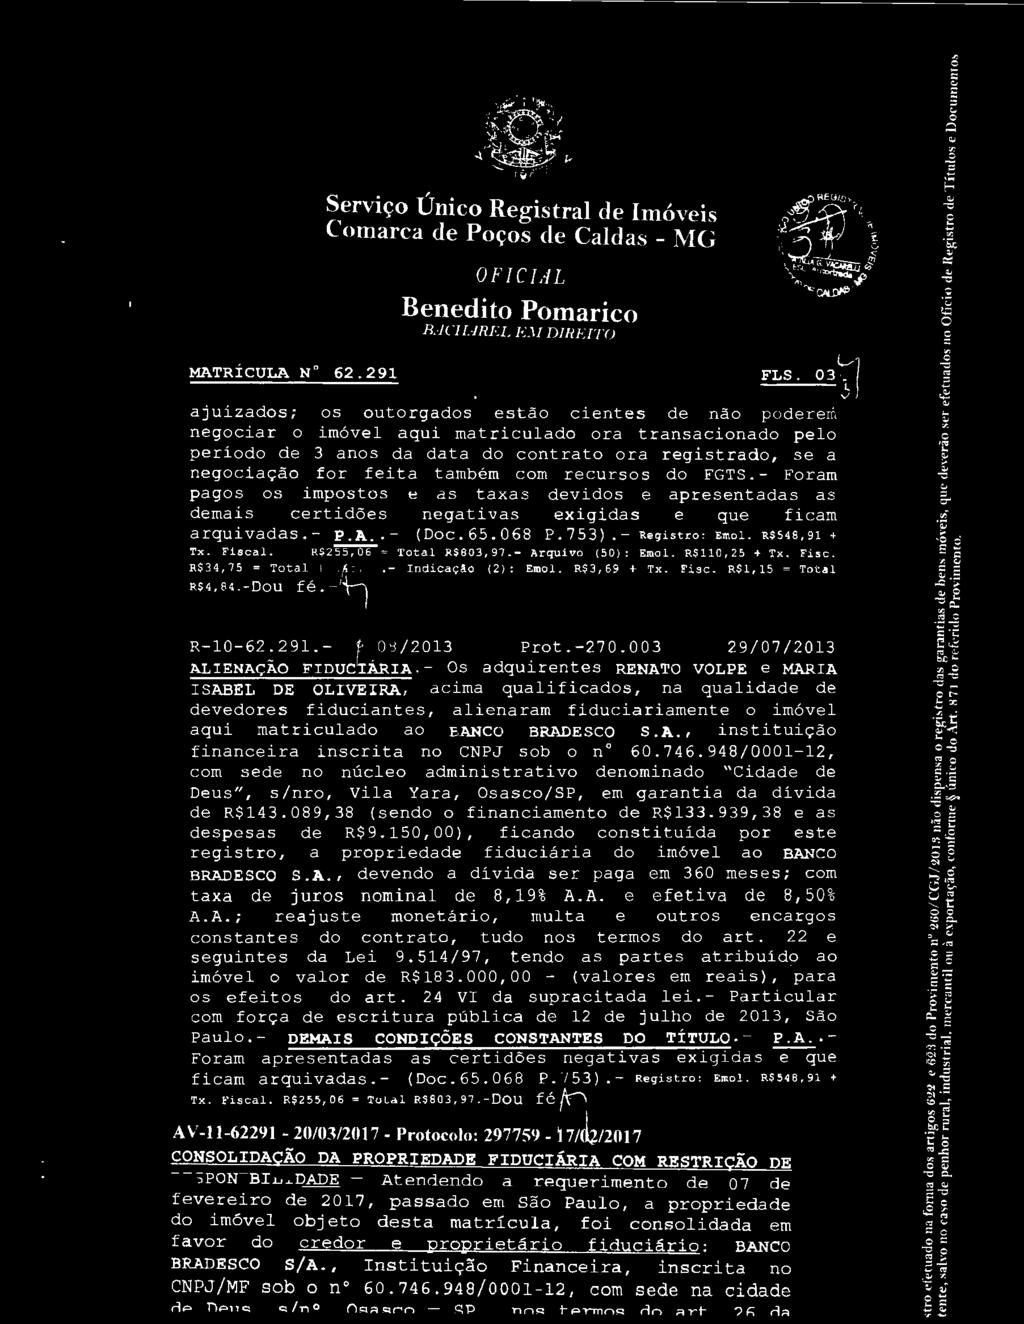 - R-10-62.291.- 1 /08/2013 Prot.-270.003 29/07/2013 ALIENAÇÃO FIDUC ÁRIA.